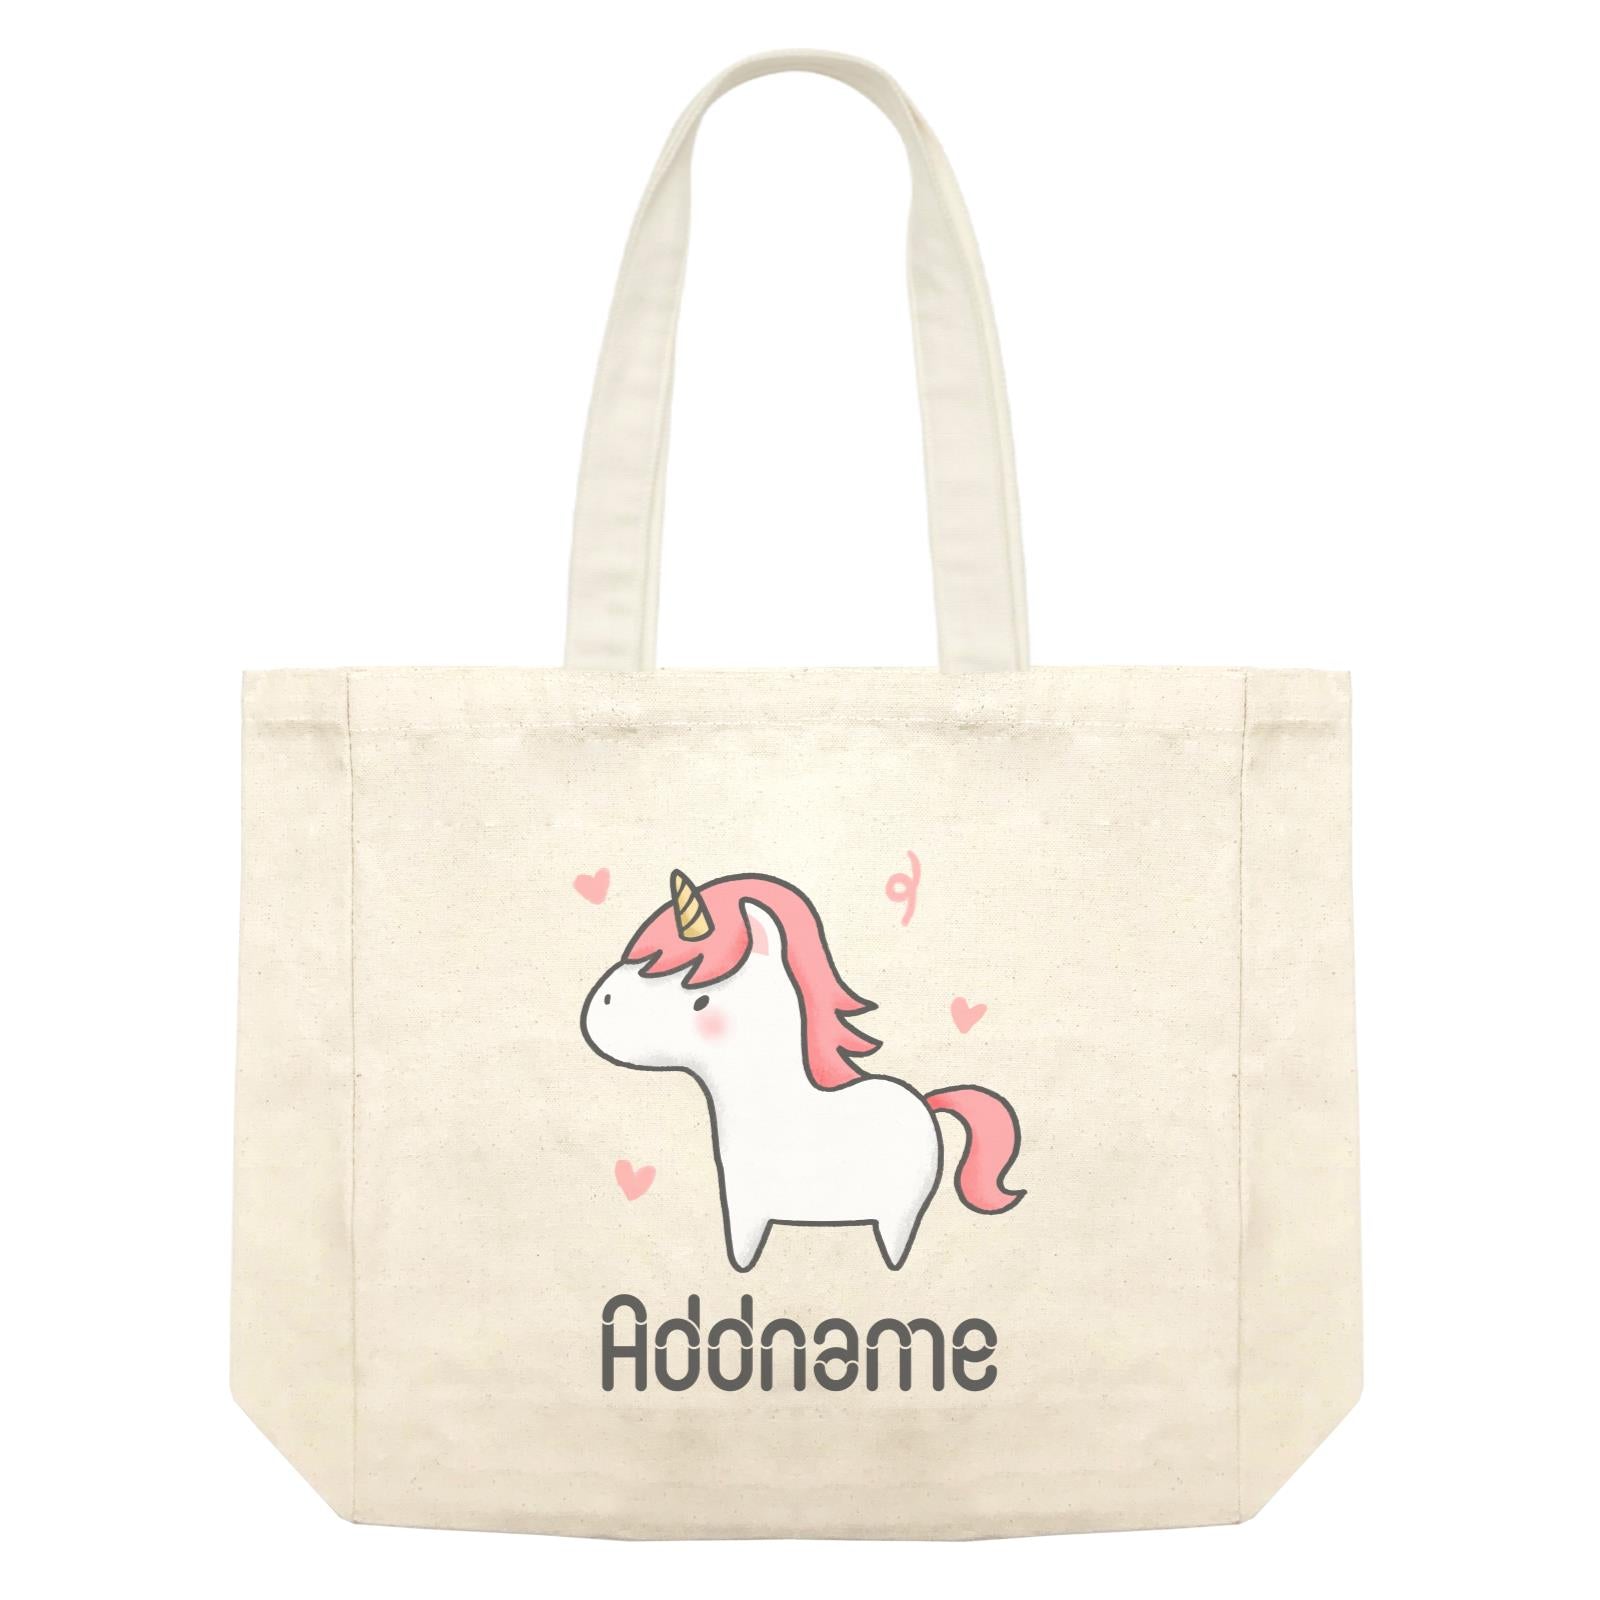 Cute Hand Drawn Style Unicorn Addname Shopping Bag